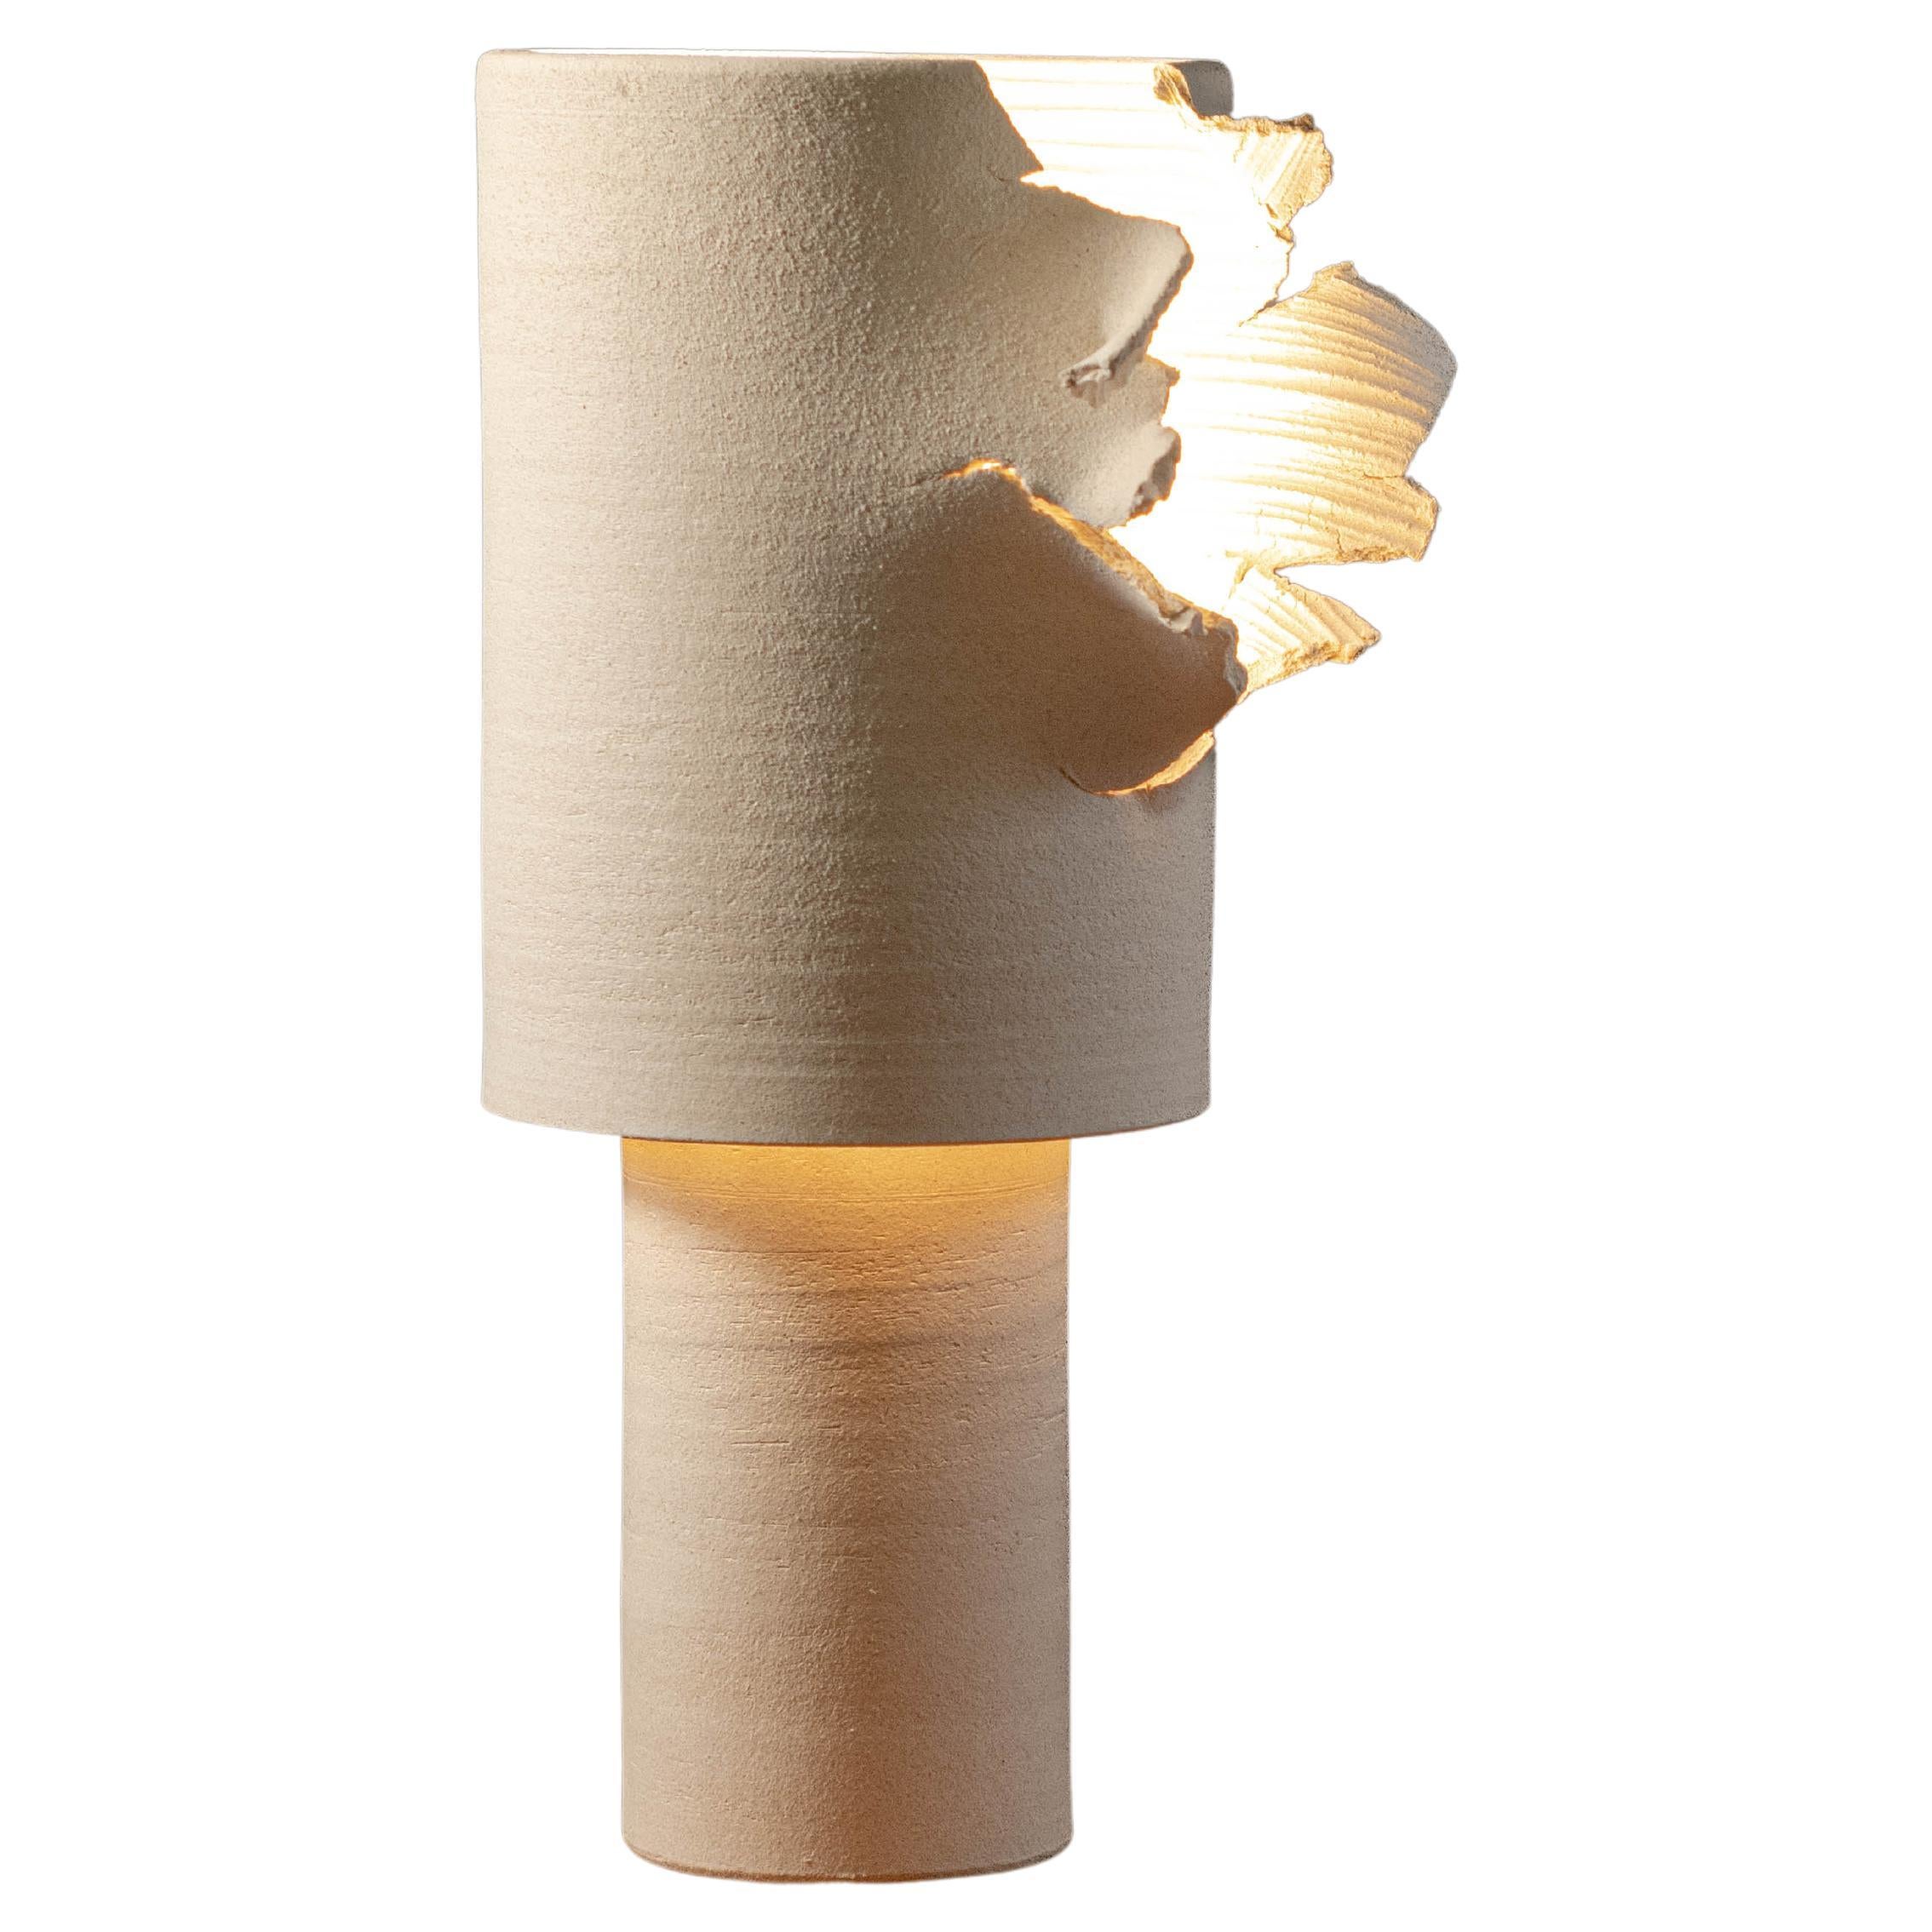 Ceramic Table Lamp Burst #1 Artist Made